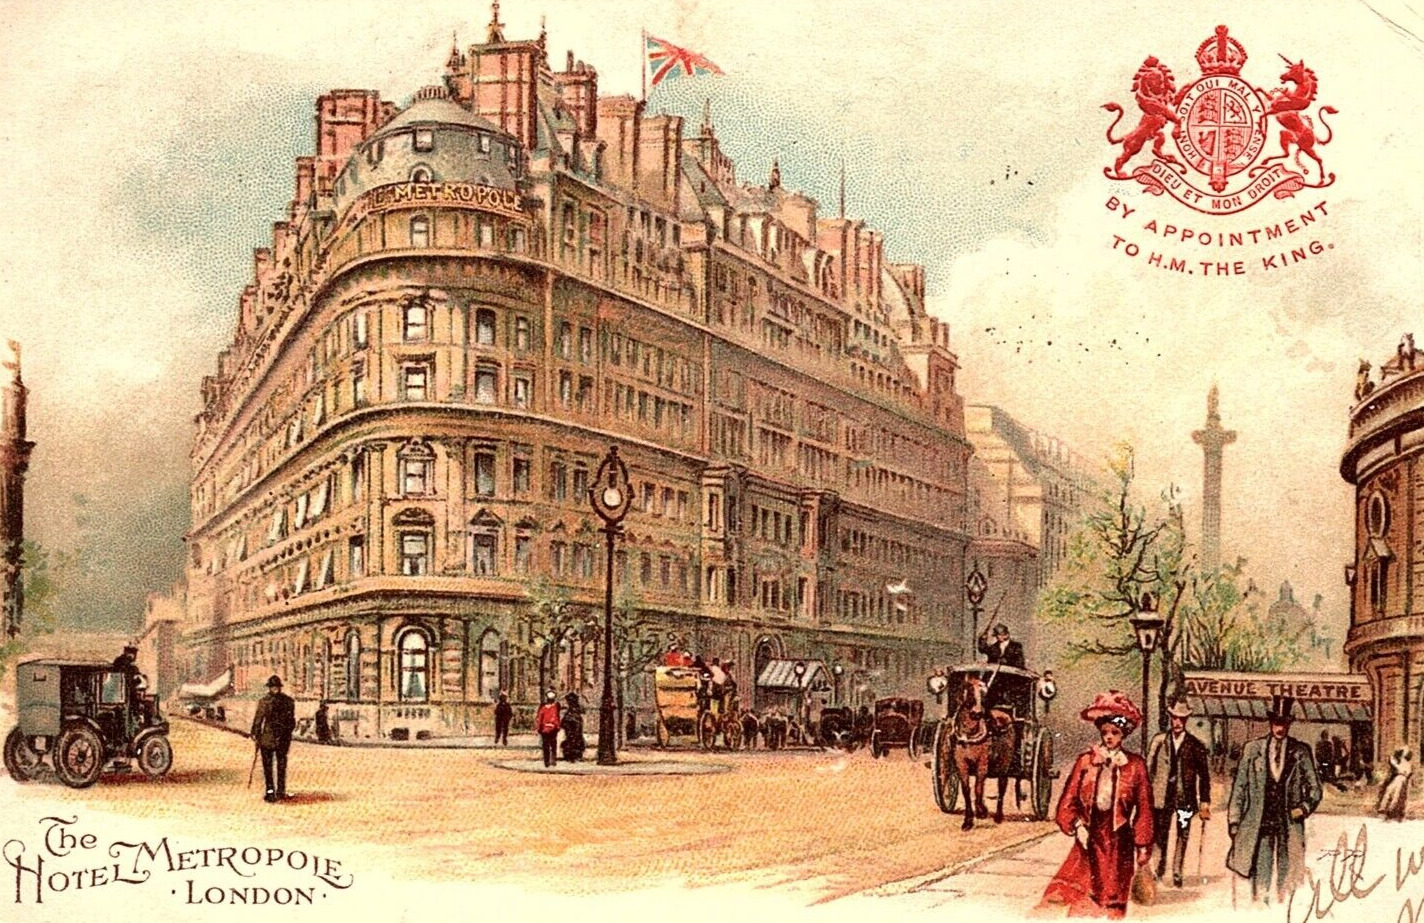 1906 HOTEL METROPOLE LONDON ENGRAVED SEAL APPT TO KING ADVERTISING POSTCARD P414